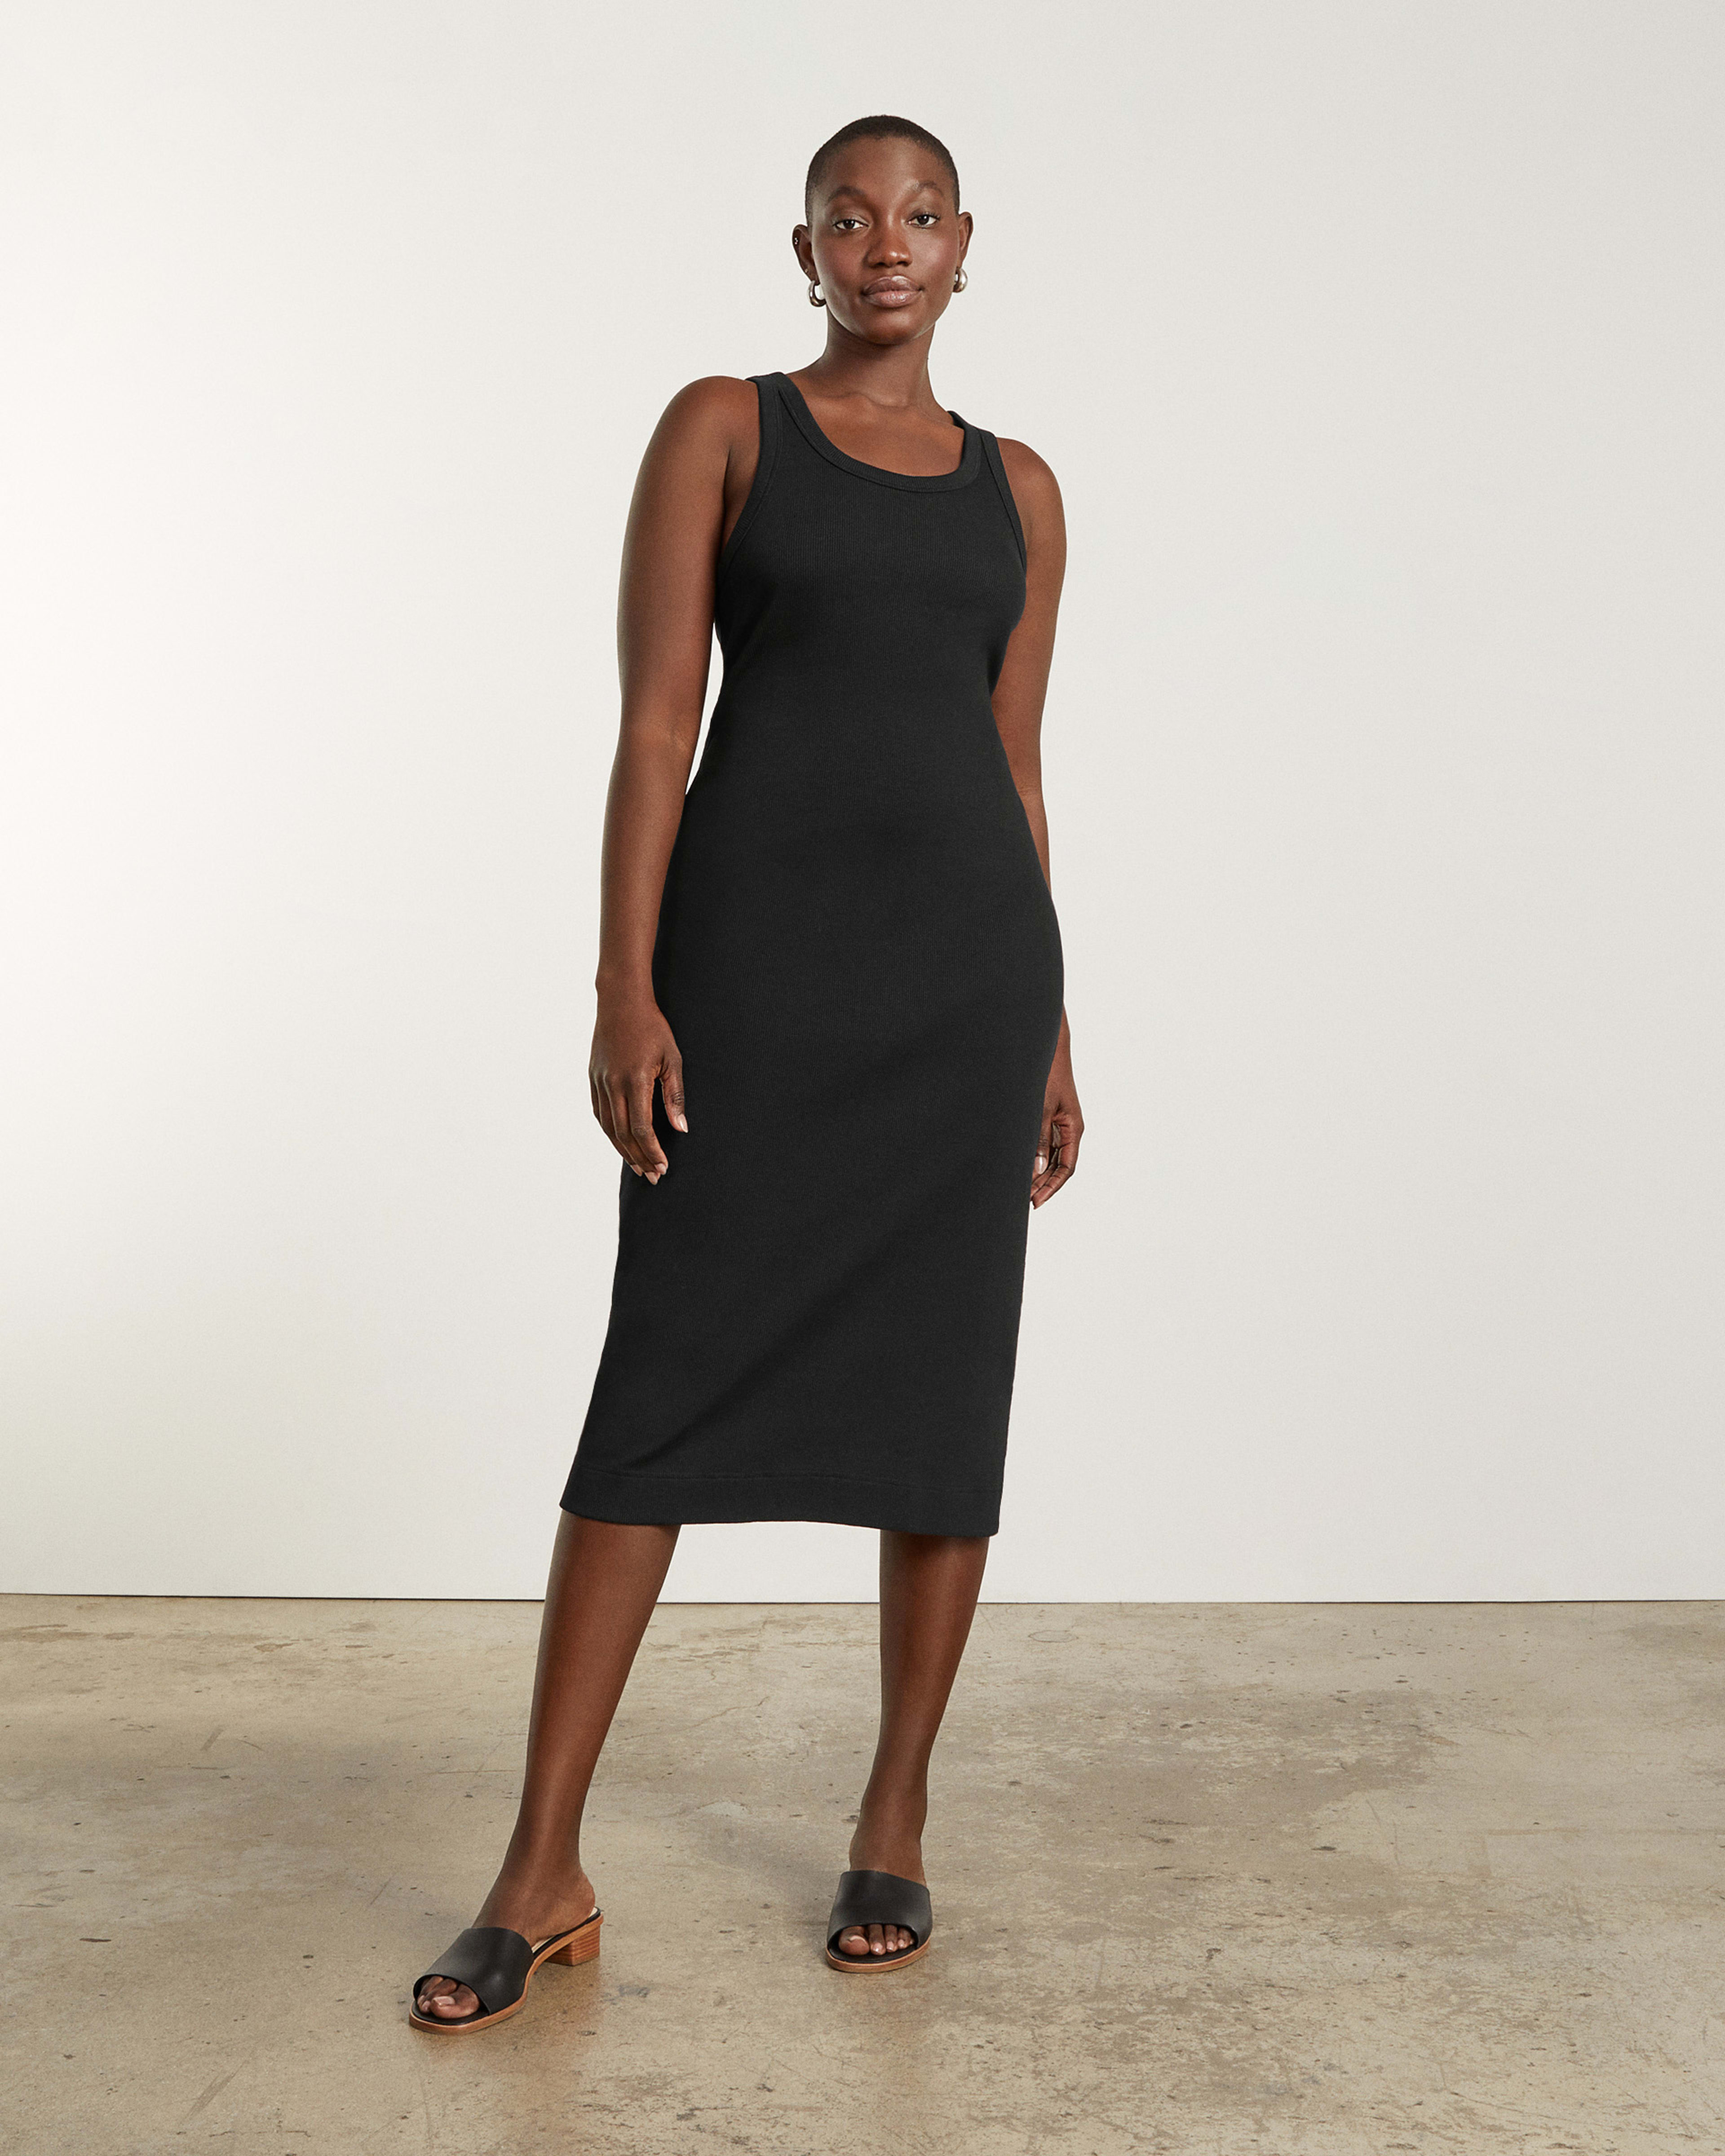 Black Tank Dress, A-Line, Sleeveless, Sustainable Dress